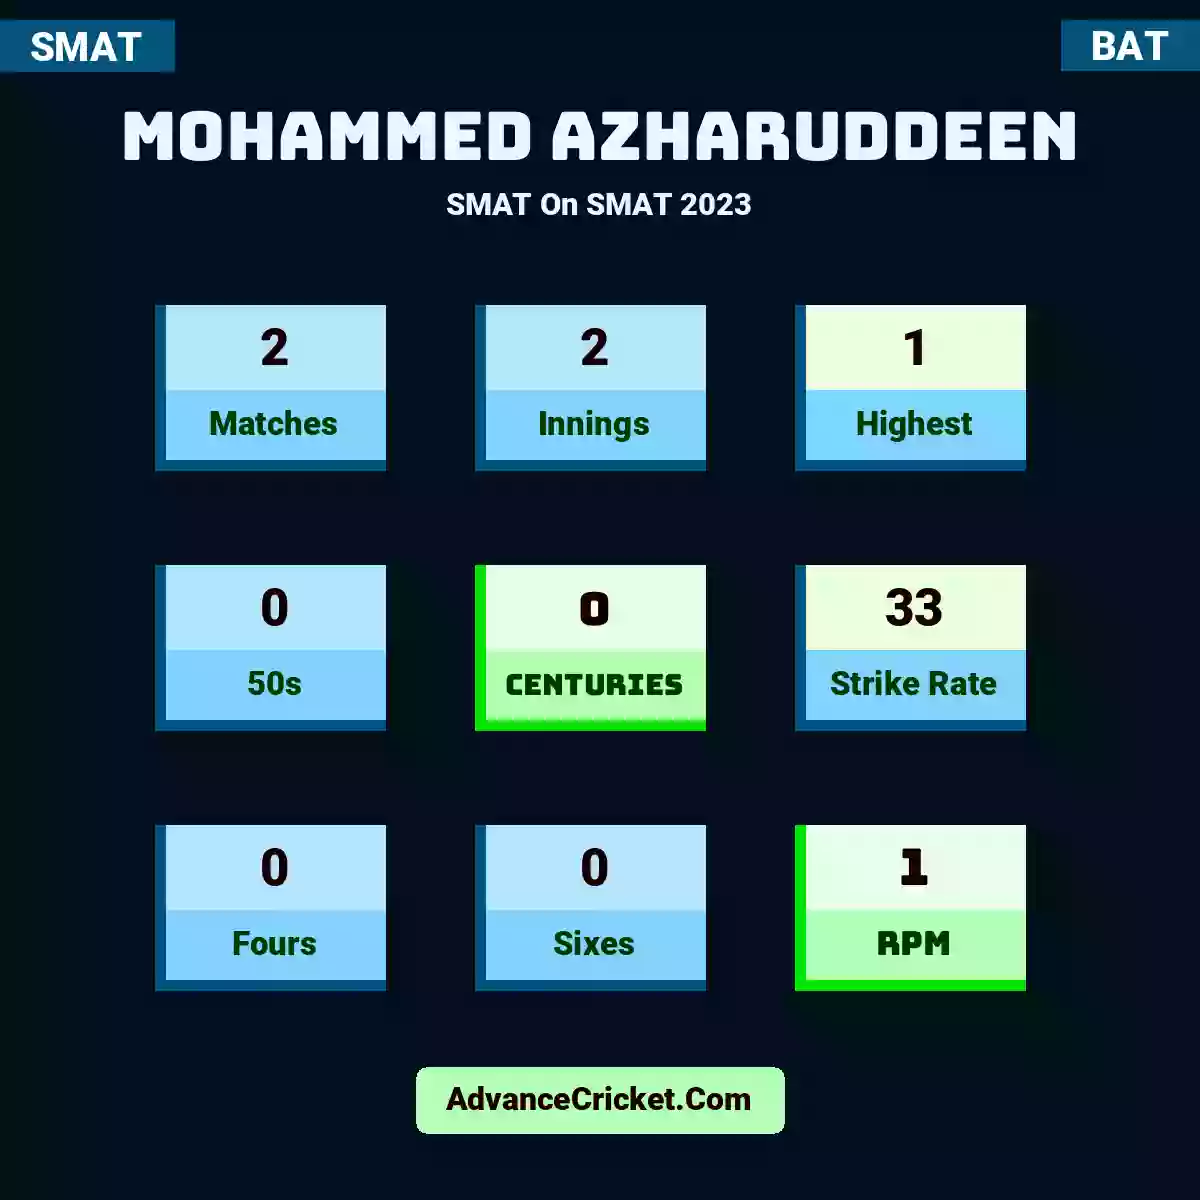 Mohammed Azharuddeen SMAT  On SMAT 2023, Mohammed Azharuddeen played 2 matches, scored 1 runs as highest, 0 half-centuries, and 0 centuries, with a strike rate of 33. M.Azharuddeen hit 0 fours and 0 sixes, with an RPM of 1.